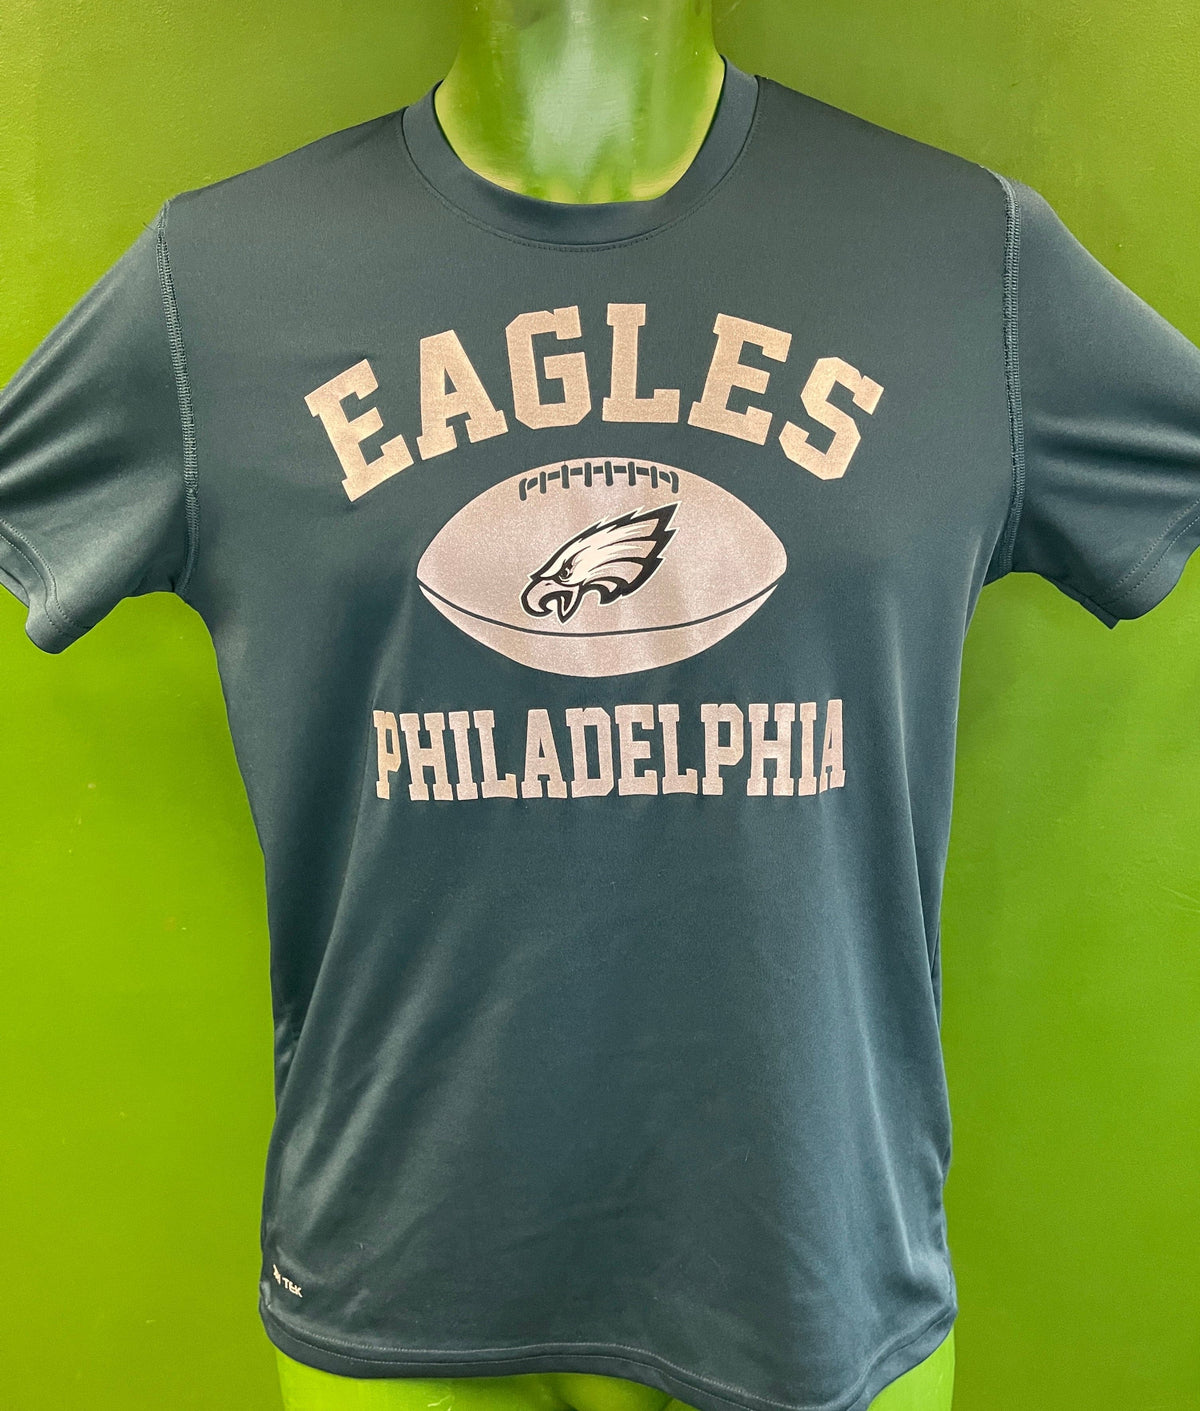 NFL Philadelphia Eagles Dri-Tek Sparkly Girls' T-Shirt Youth Large 14-16